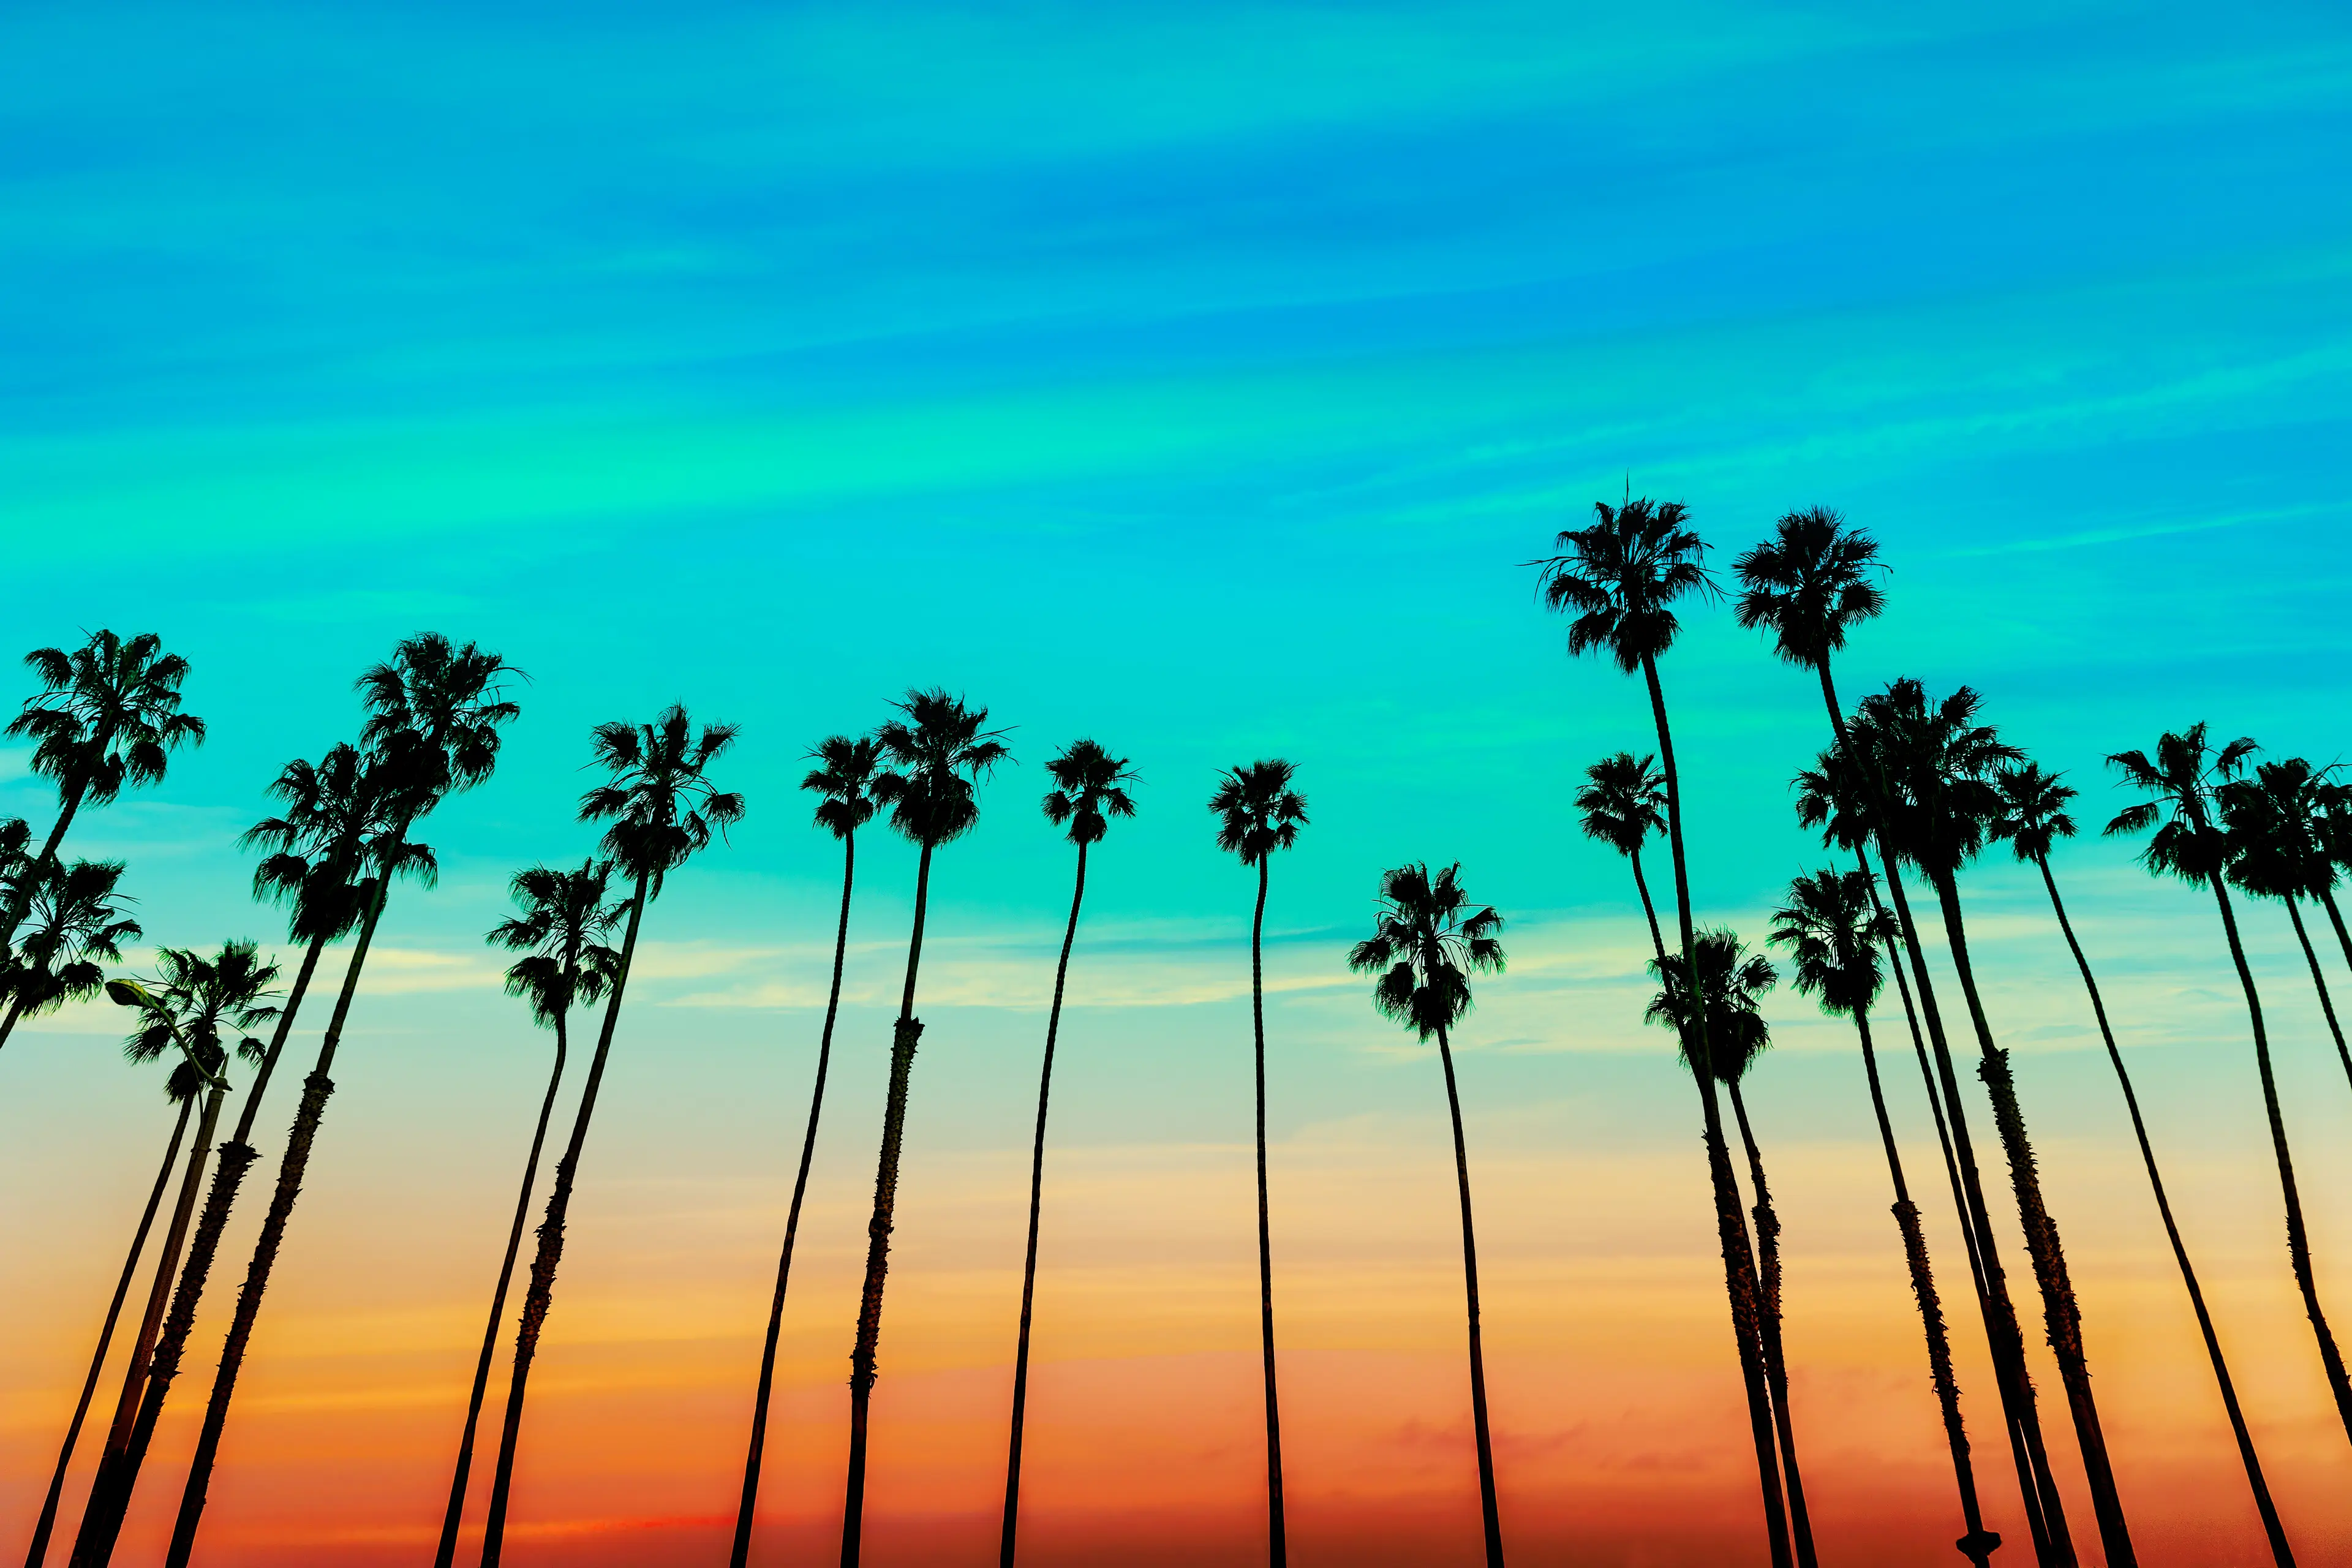 Rows of palm trees in Santa Barbara